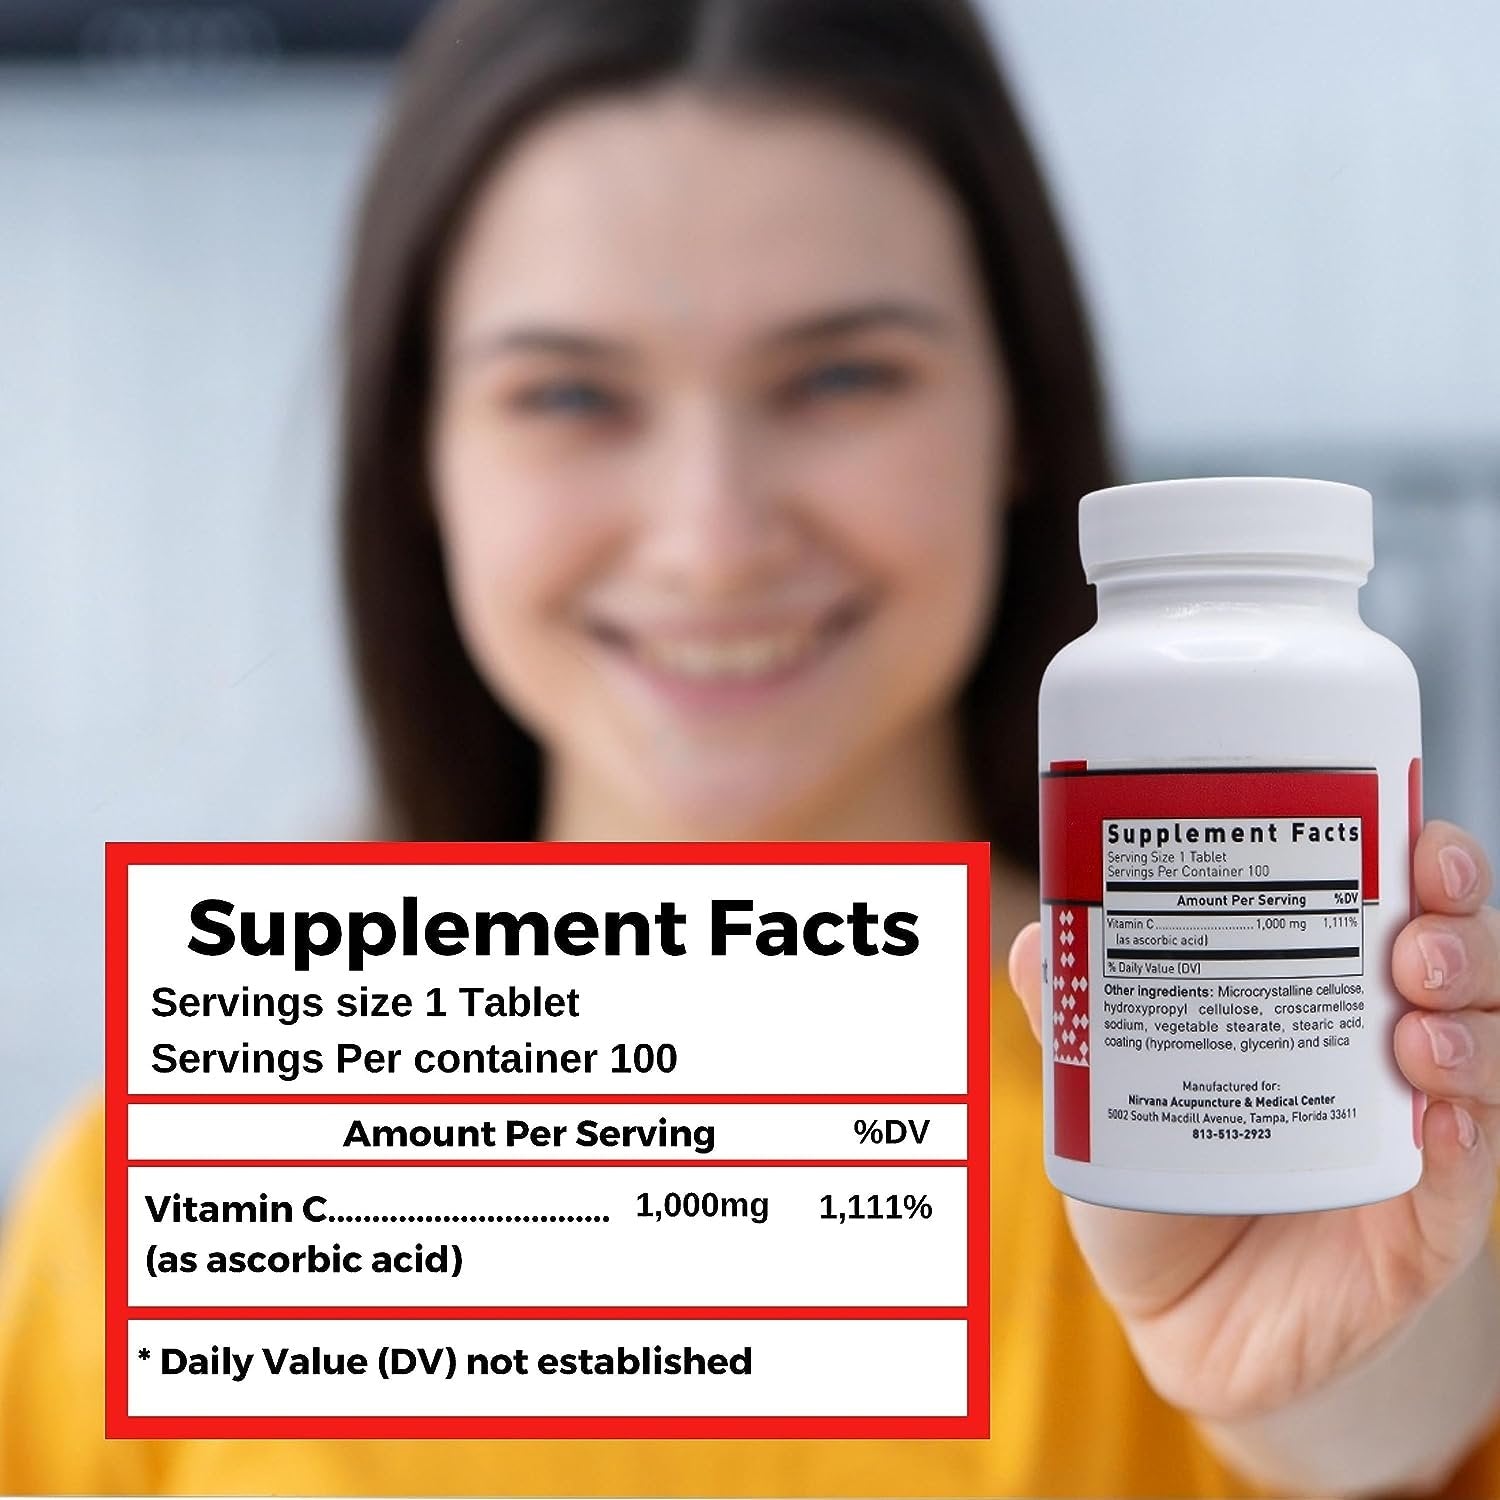 Dr. Sandi's Vitamin C 1000mg - High-Potency Ascorbic Acid Tablets for Superior Antioxidant Support - Ascorbic Acid Vitamin C for Overall Vitality - Vit C 1000mg, 100 Count Vitamin C Tablets